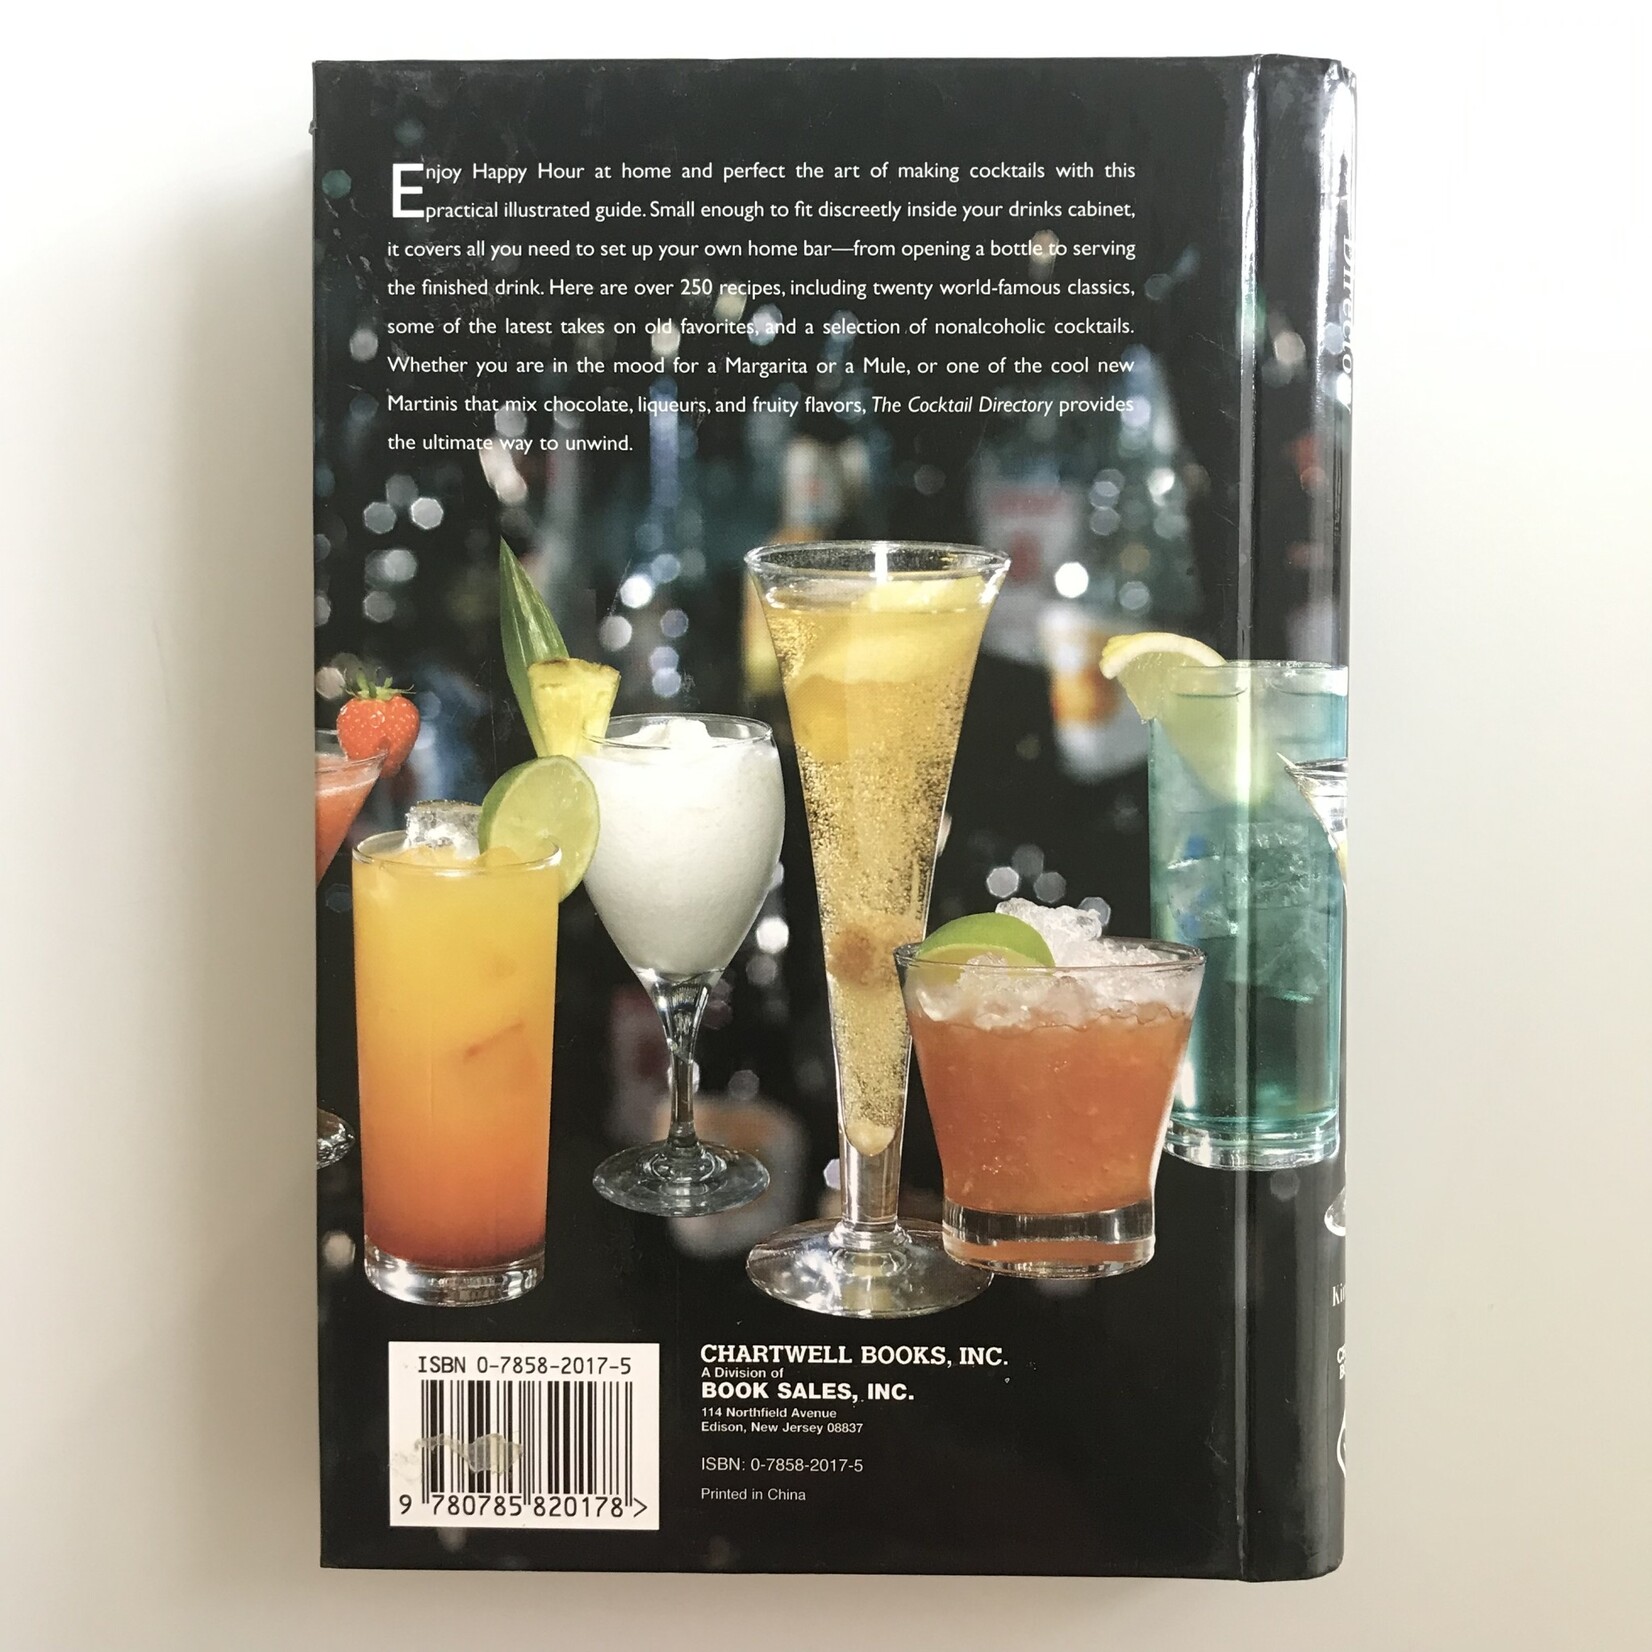 Kim Davies - The Cocktail Directory - Hardback (USED)